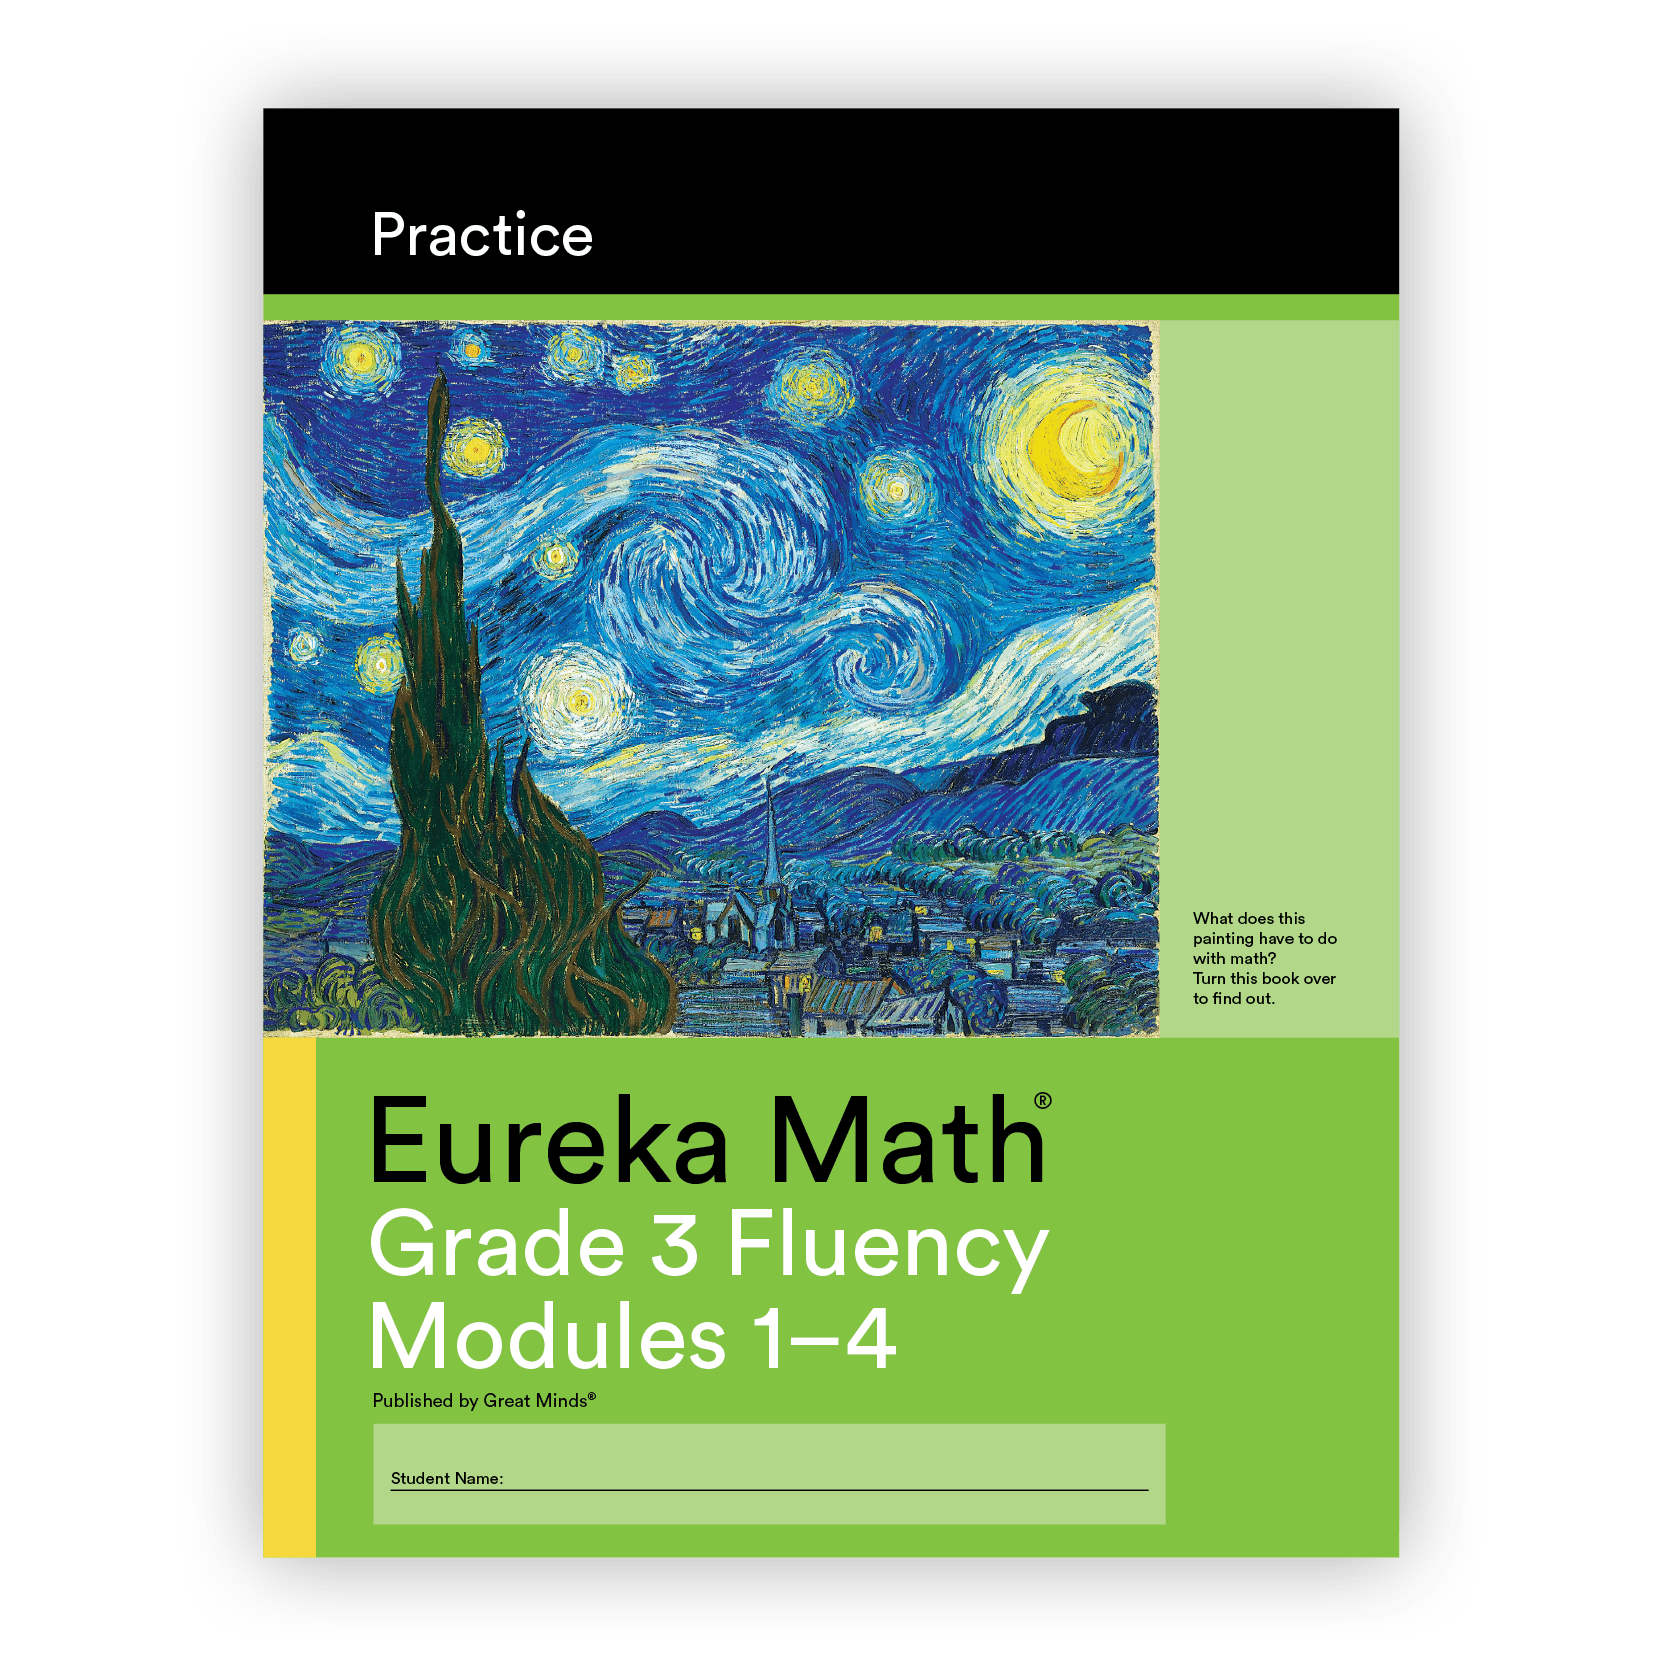 Eureka-Math-LPS-Practice-Sample